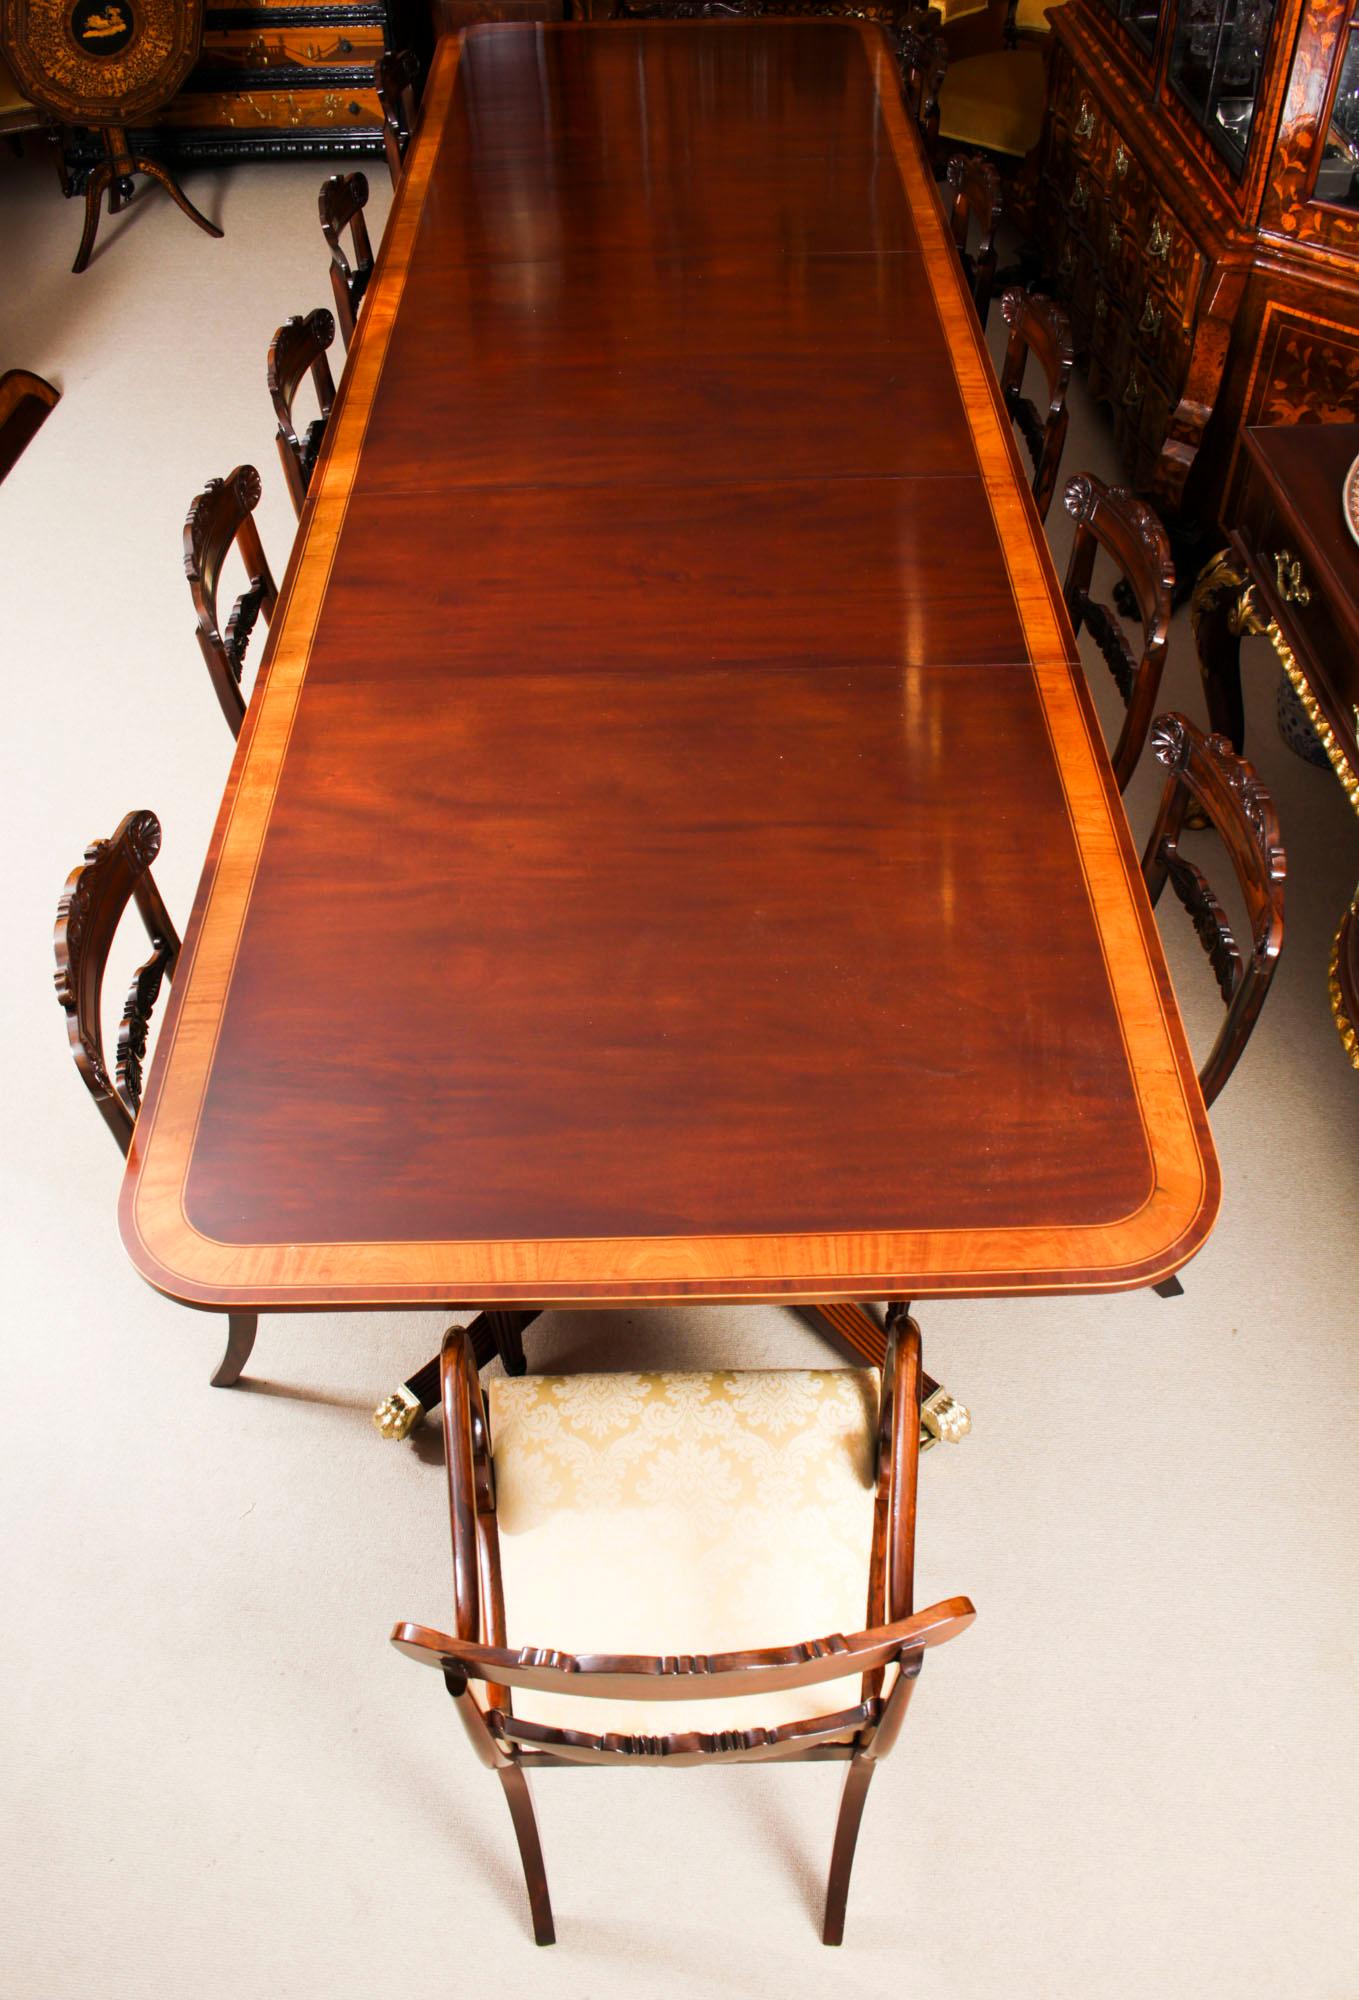 Antique Regency Revival Metamorphic Dining Table, 19th Century 8